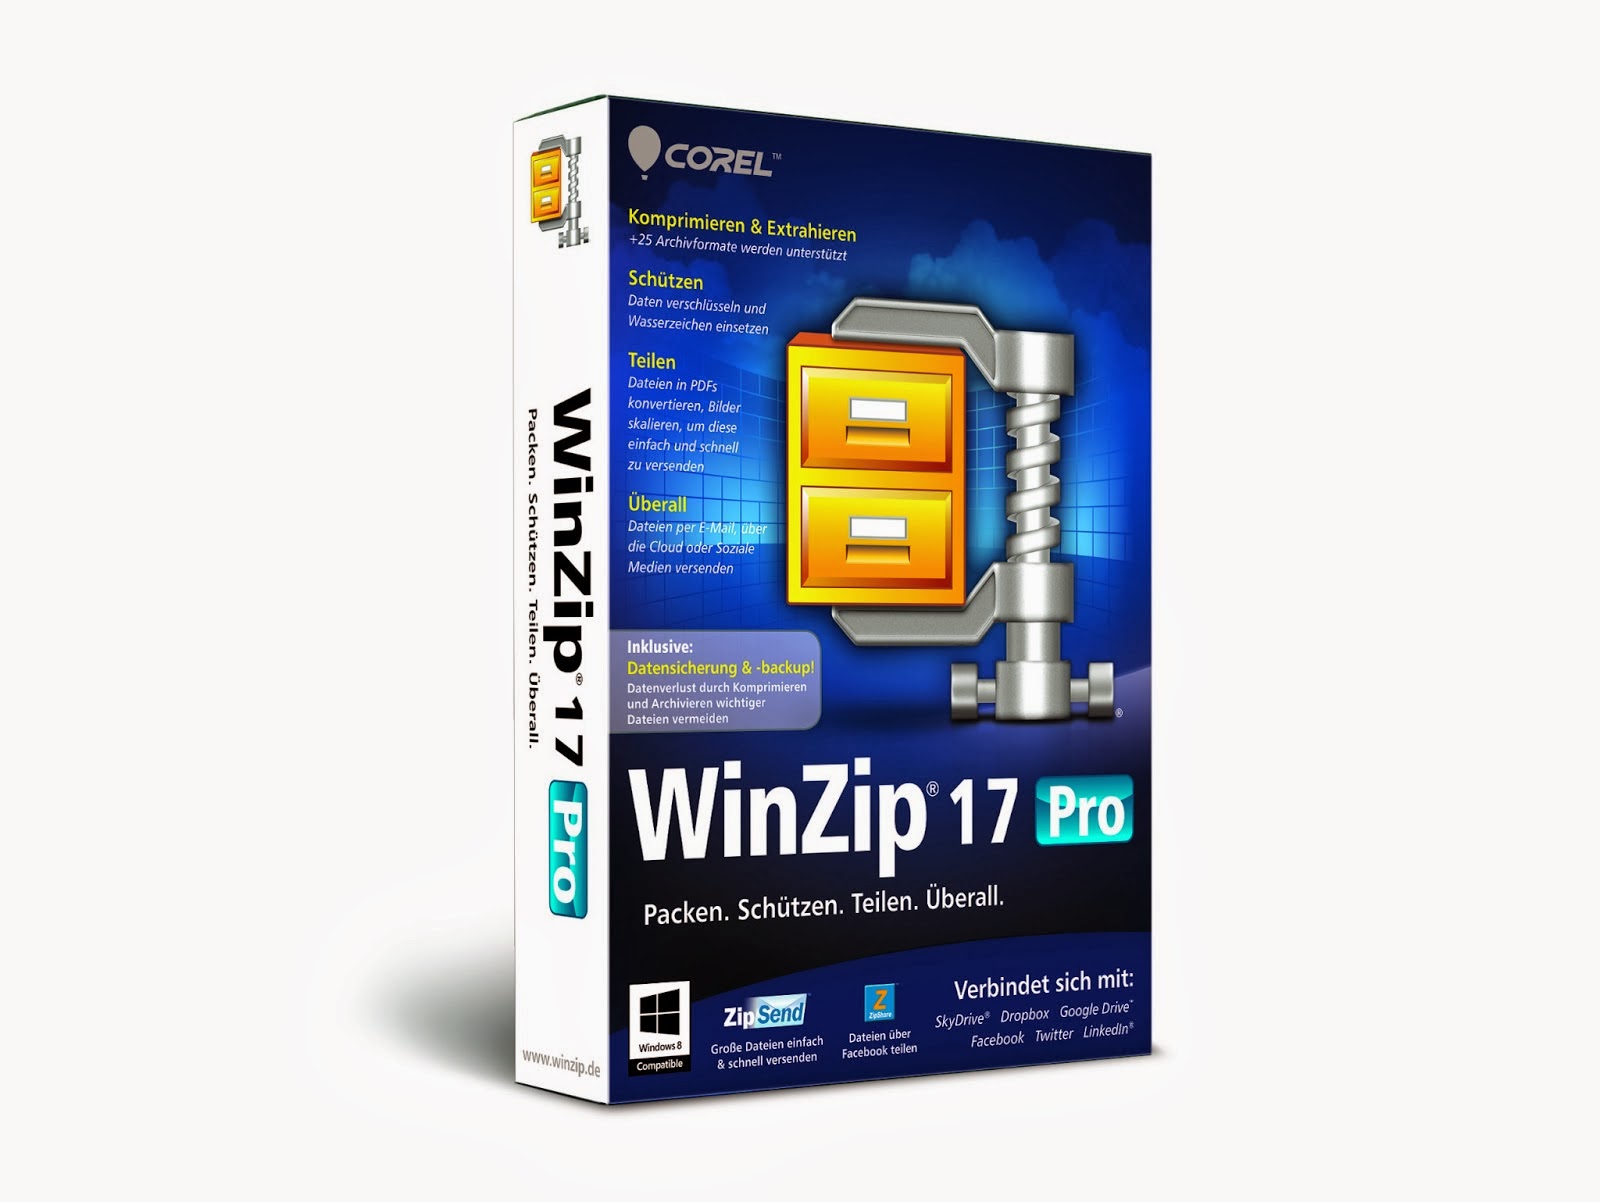 winzip 8.1 free download baixaki